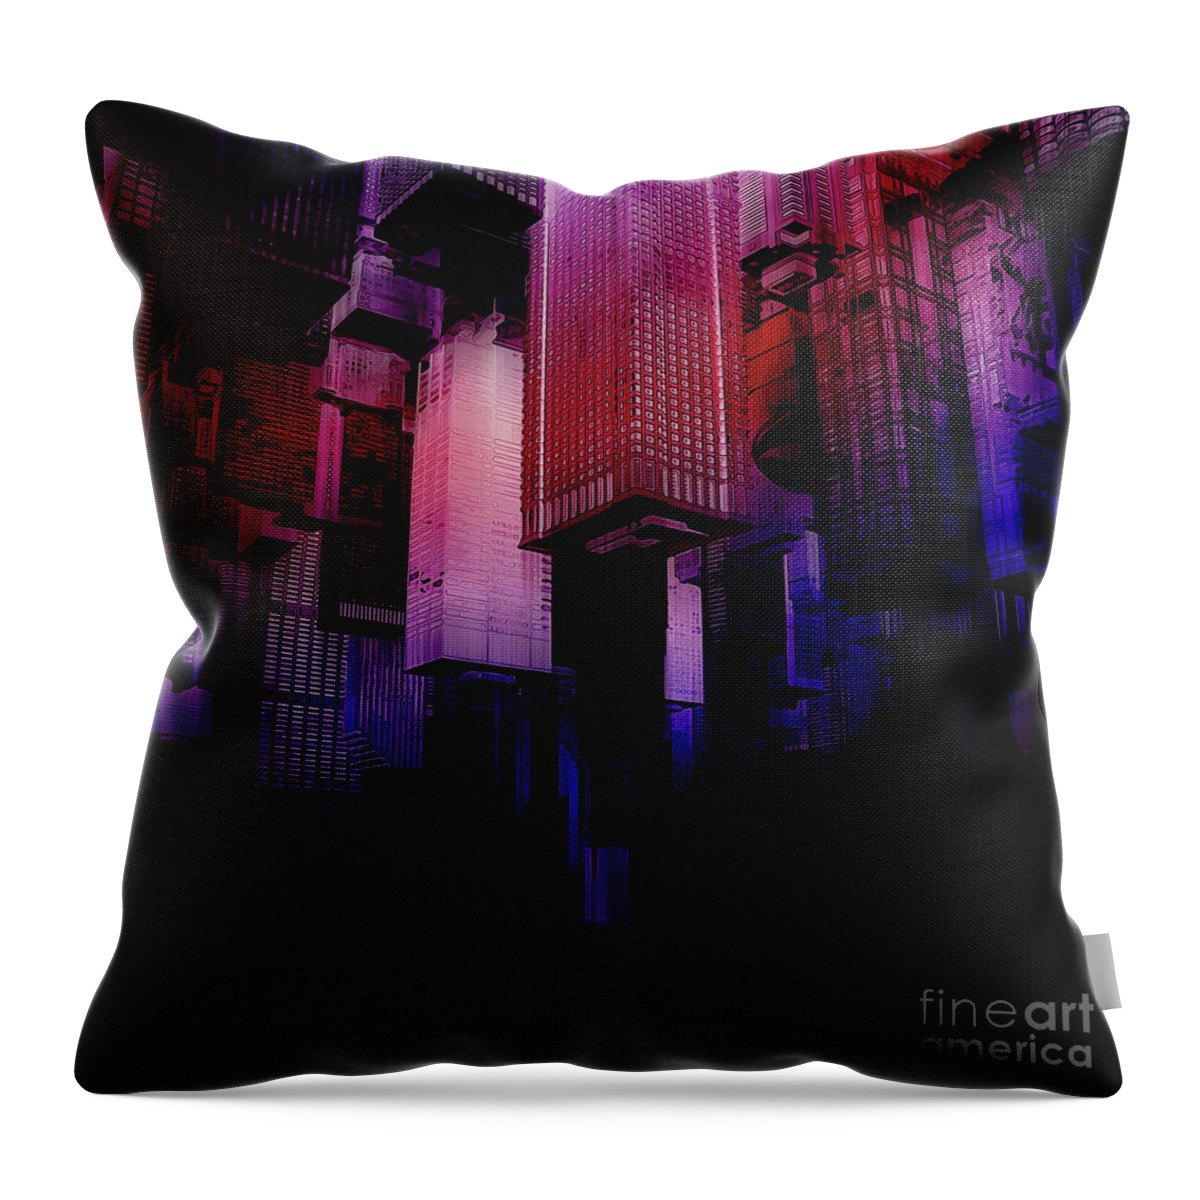 Upside Down Throw Pillow featuring the digital art Sunken City by Phil Perkins